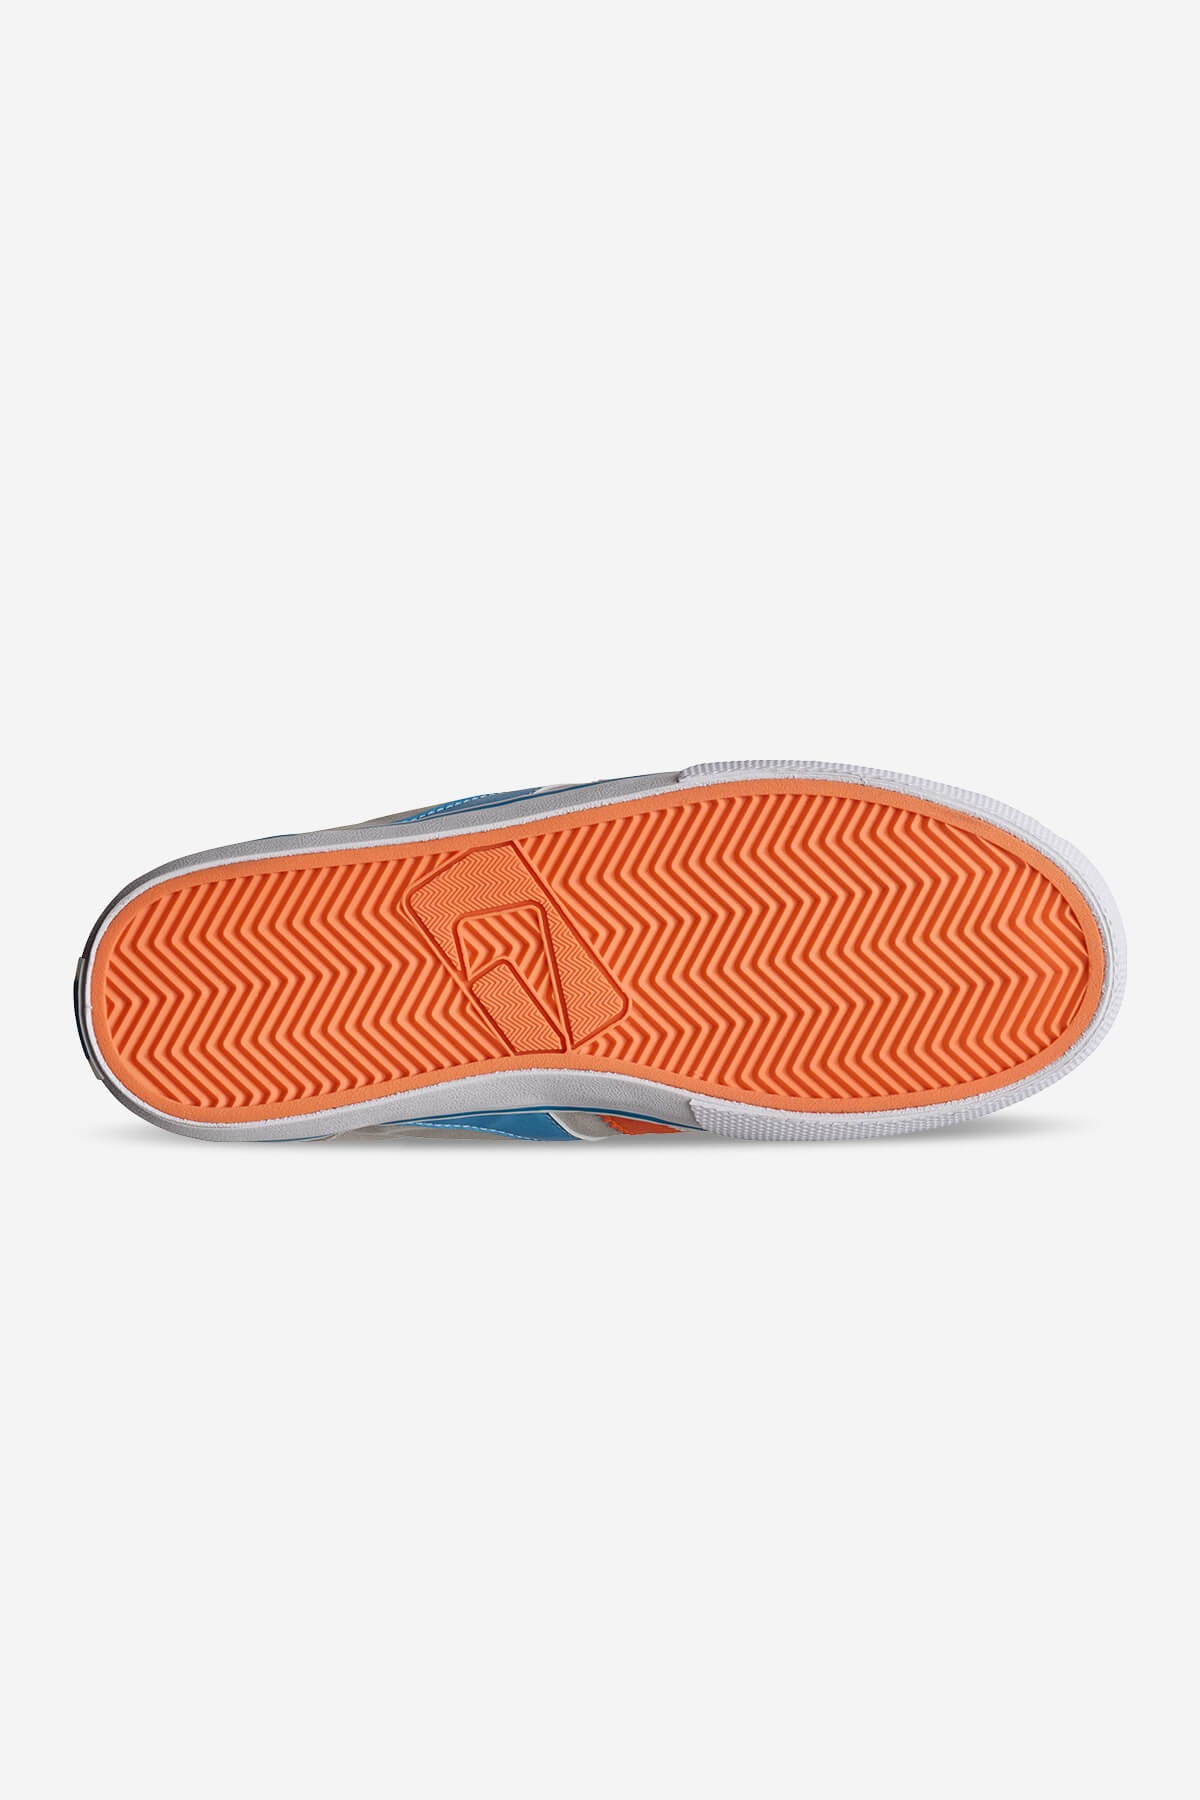 Globe - Encore 2 - Cloud/Blue/Orange - skateboard Schuhe